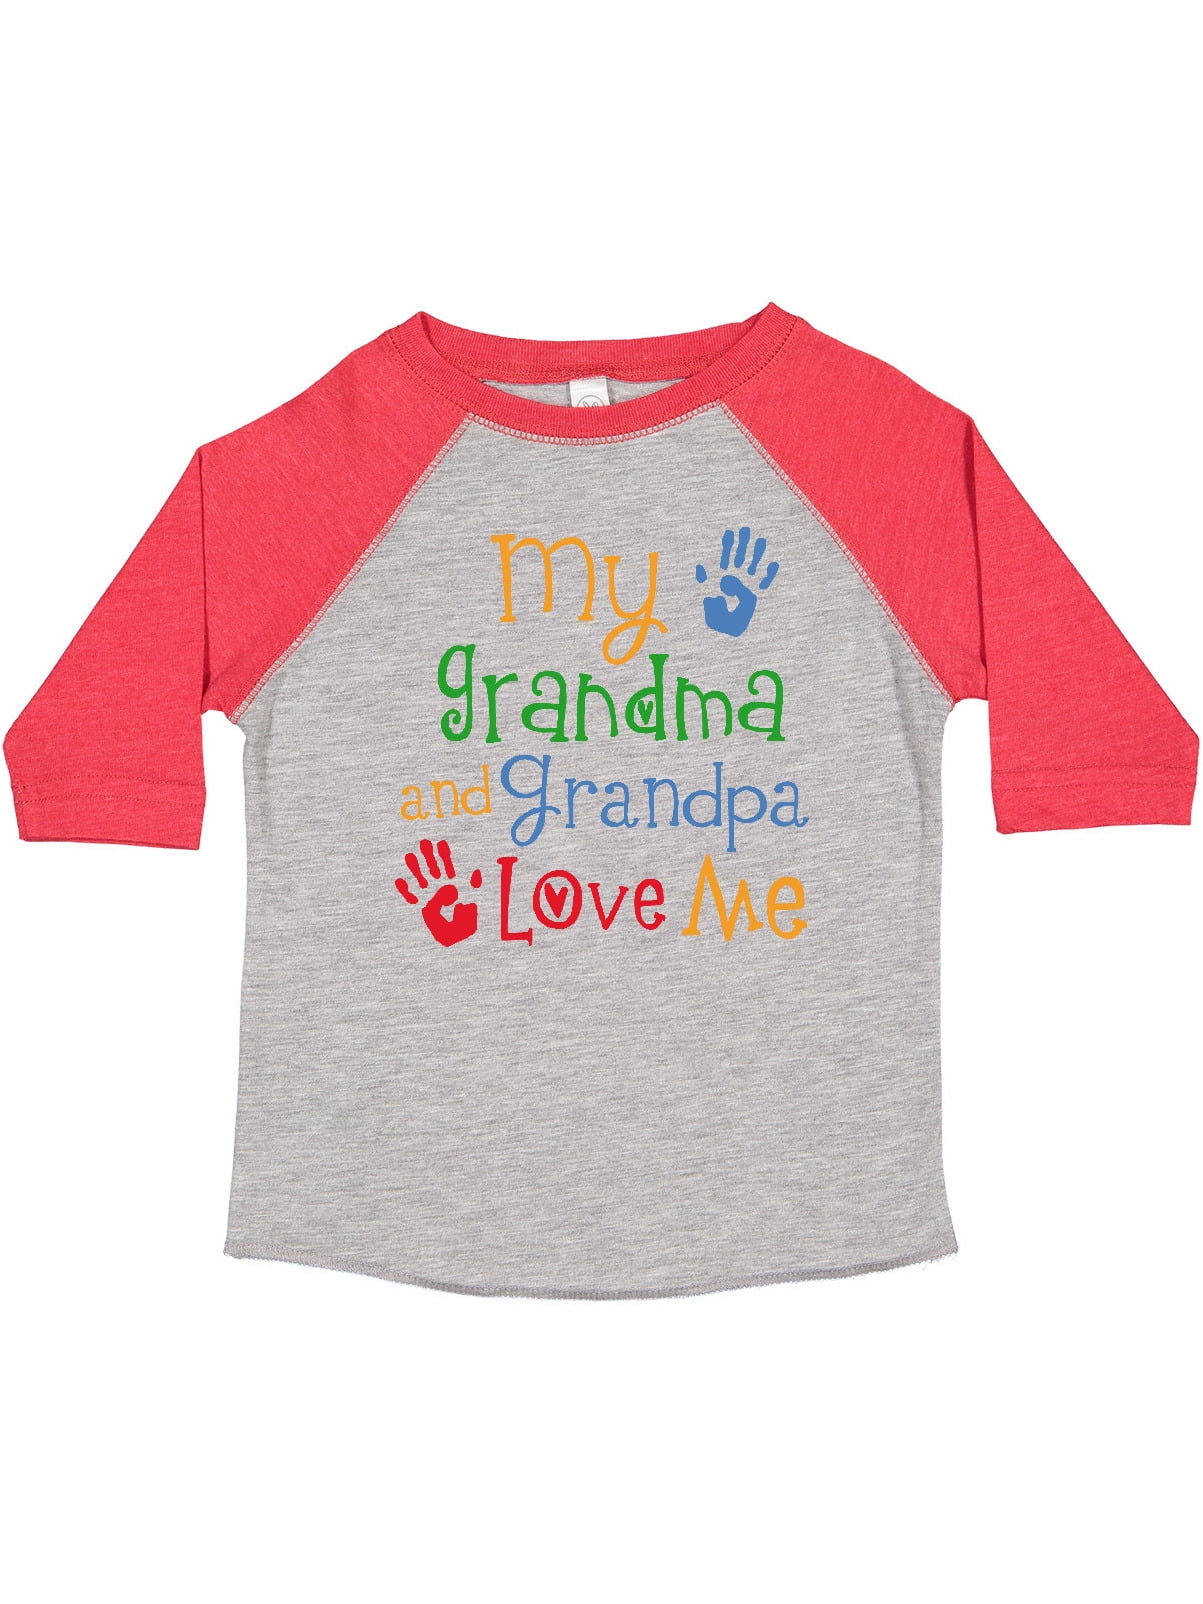 I love my Grandma & Grandpa toddler shirt kids grandparents tee shirt 